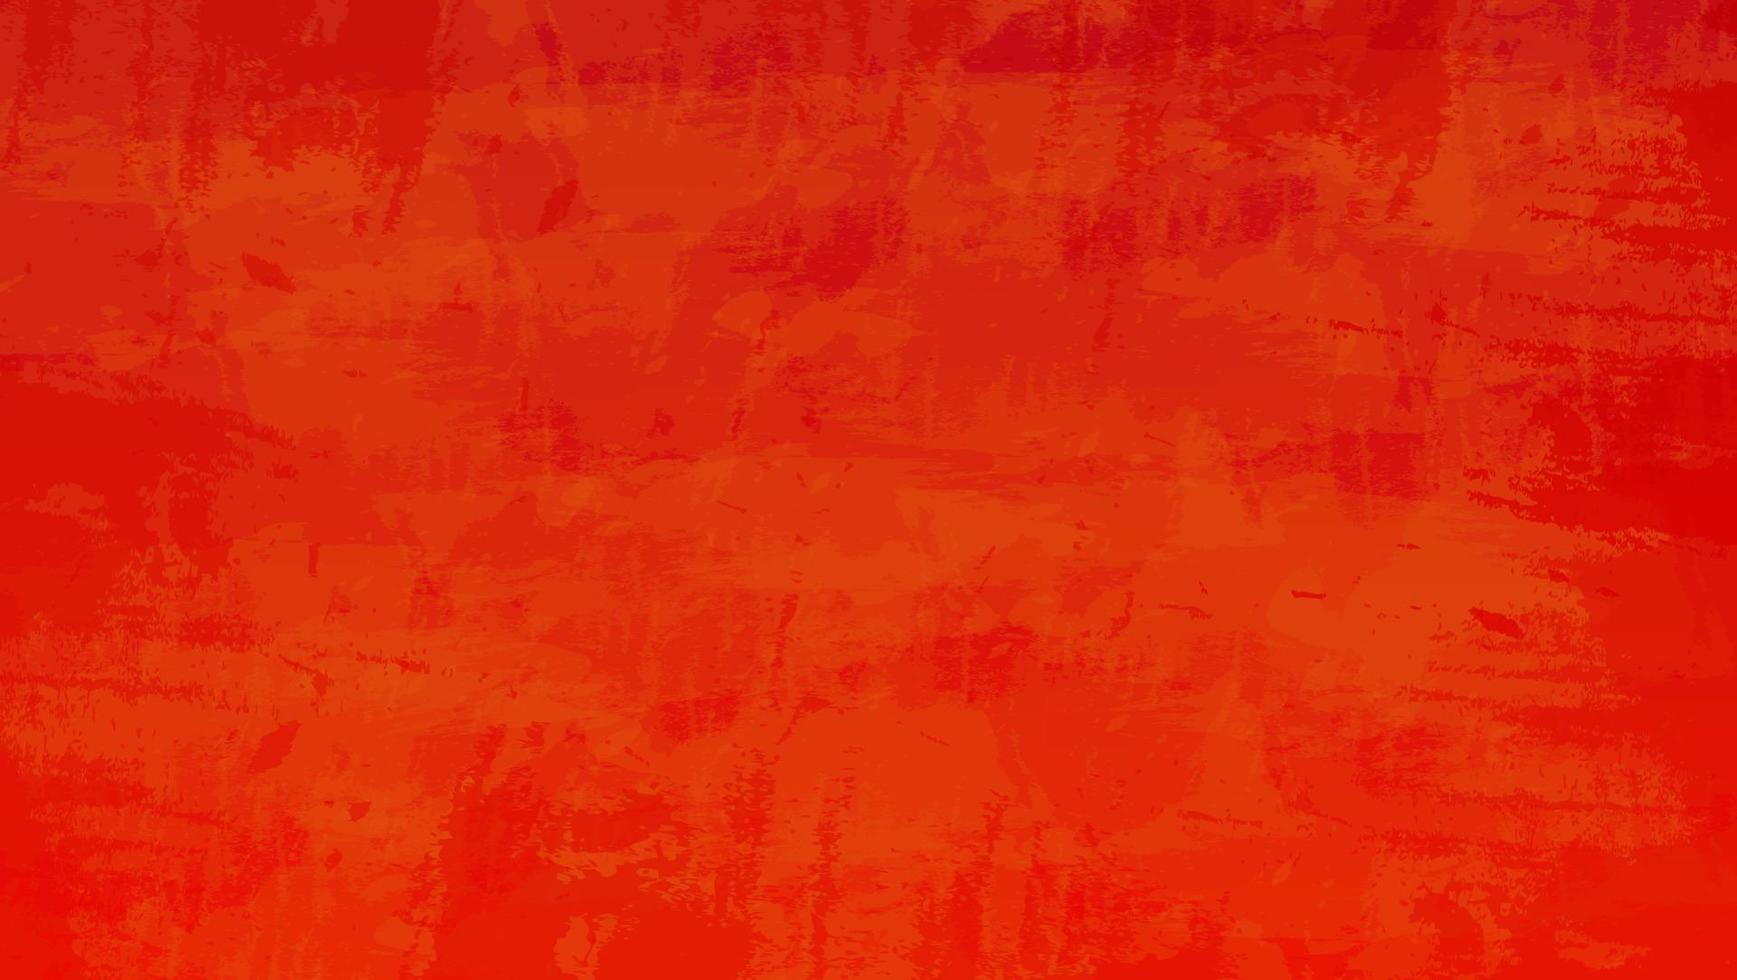 Tom abstrakt ljus röd orange grunge akvarell textur bakgrundsdesign vektor